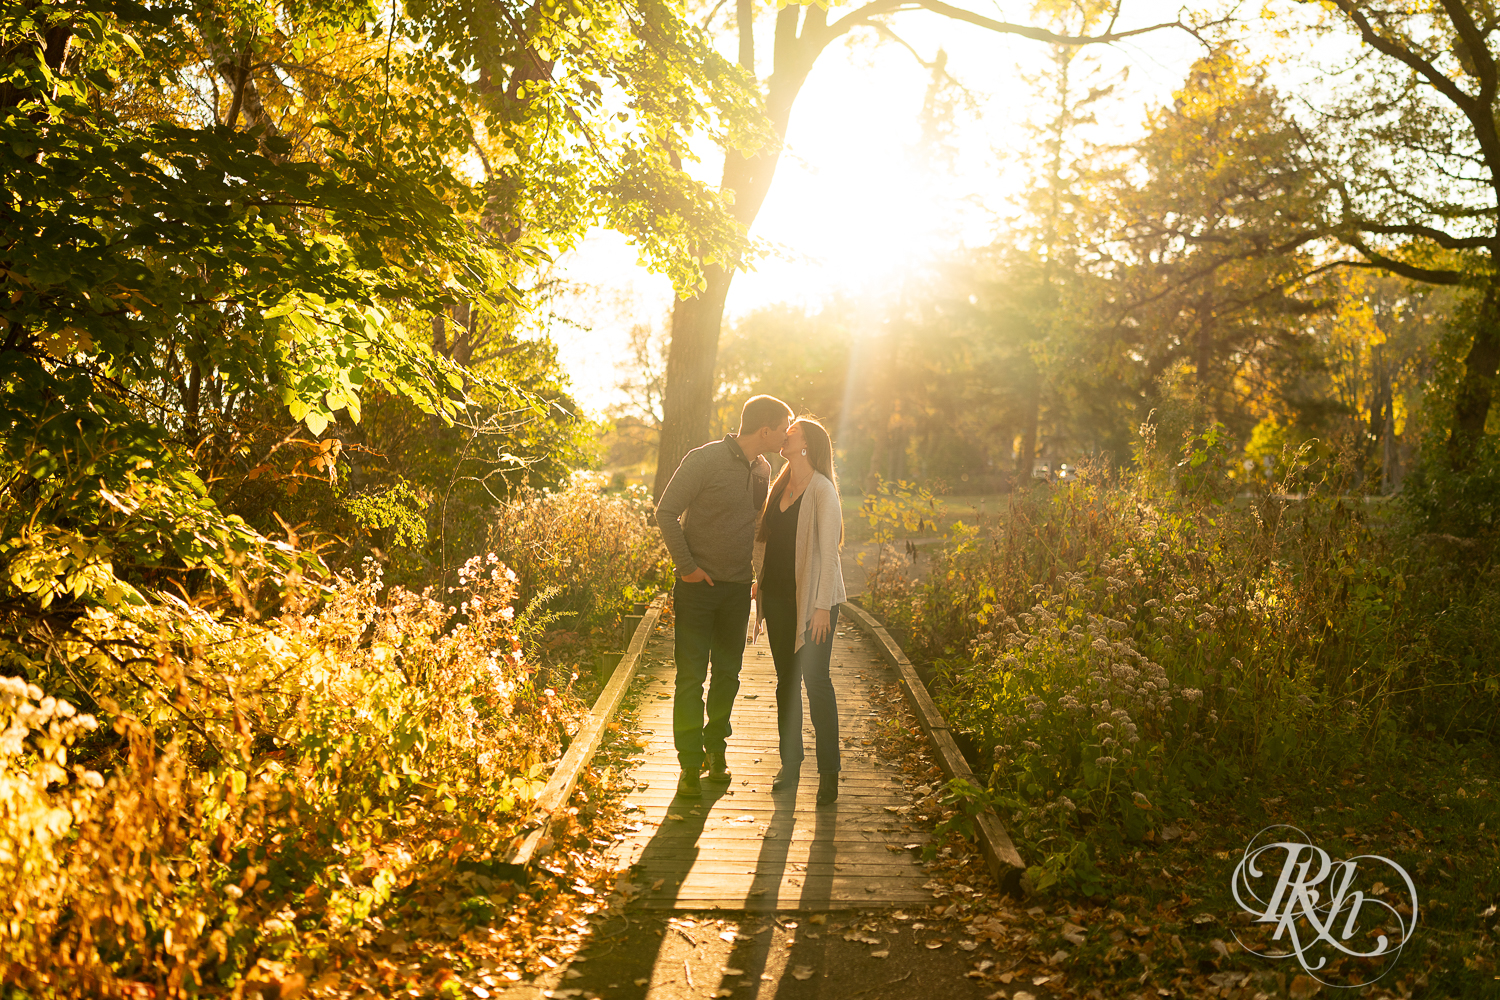 Man and woman kissing during sunset at Matoska Park in White Bear Lake, Minnesota. 